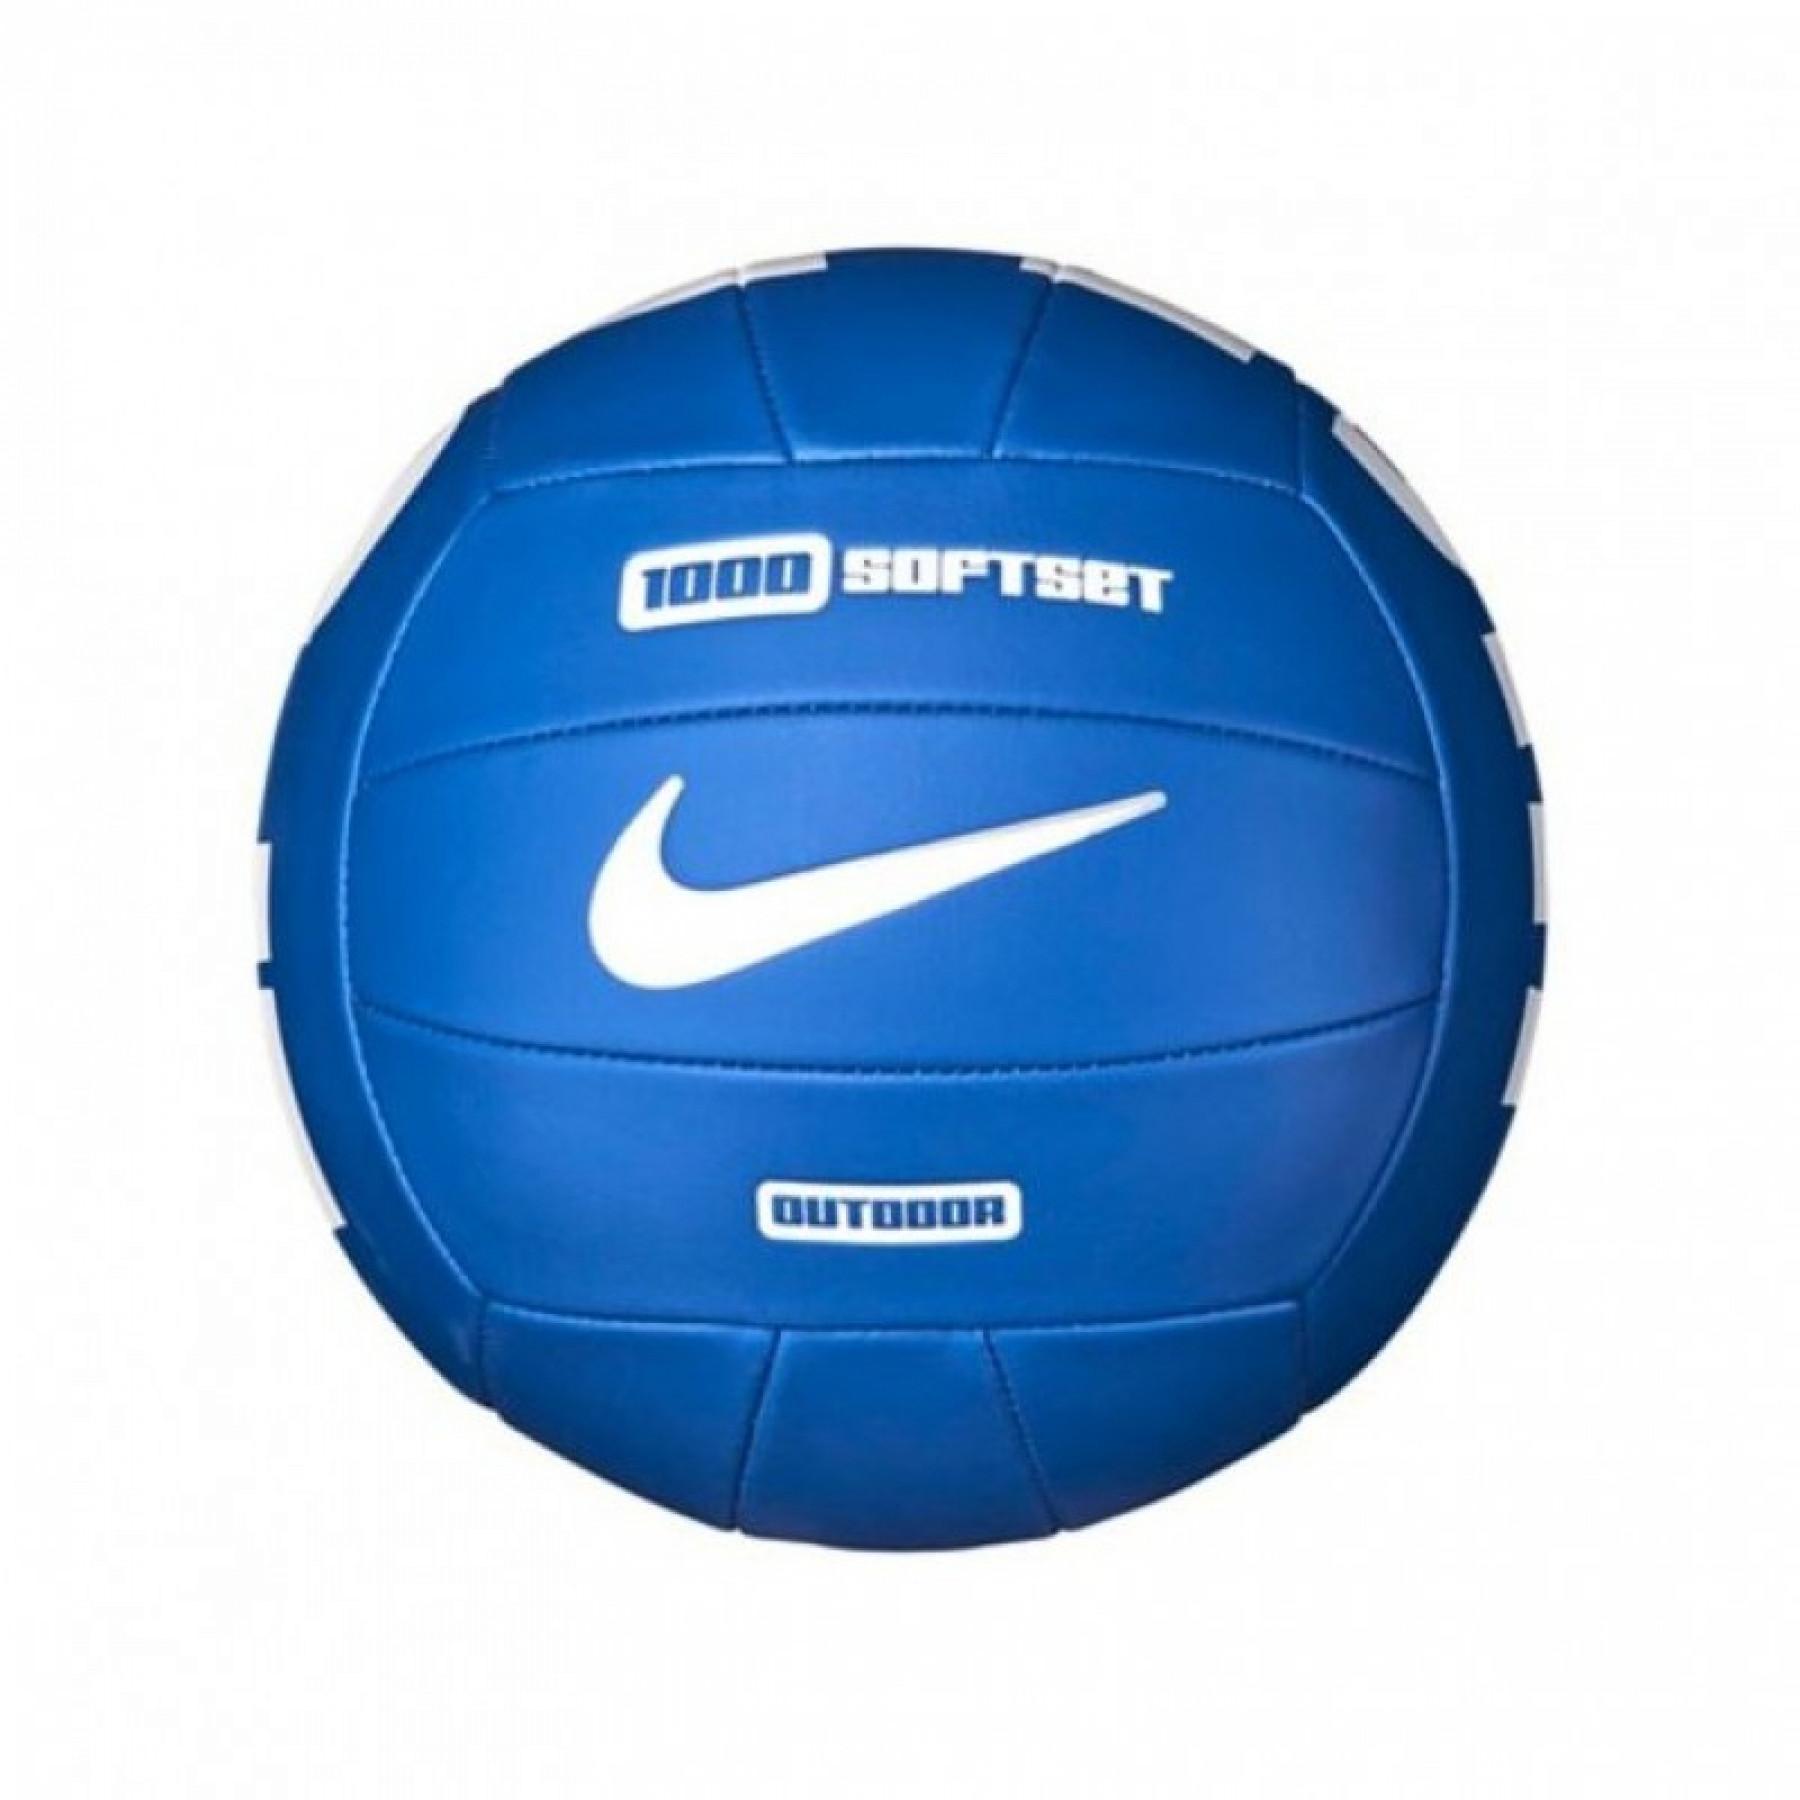 Satz mit 3 Luftballons Nike 1000 softset outdoor orange